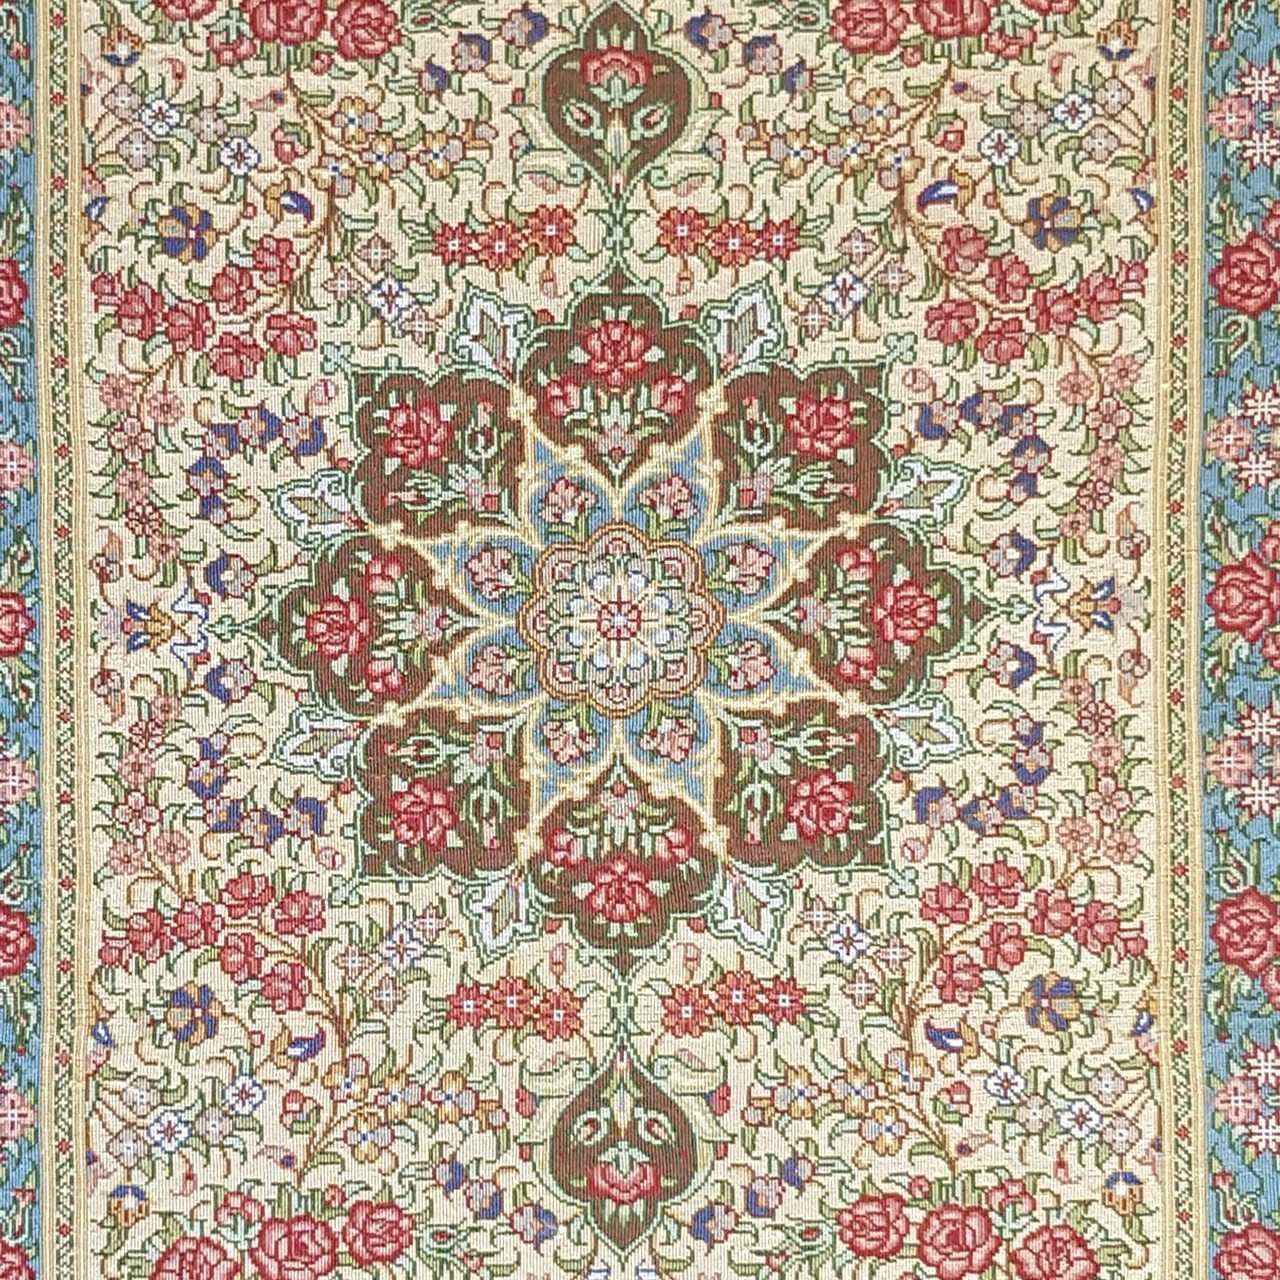 Pictorial Tabriz Carpet Ref: 911152